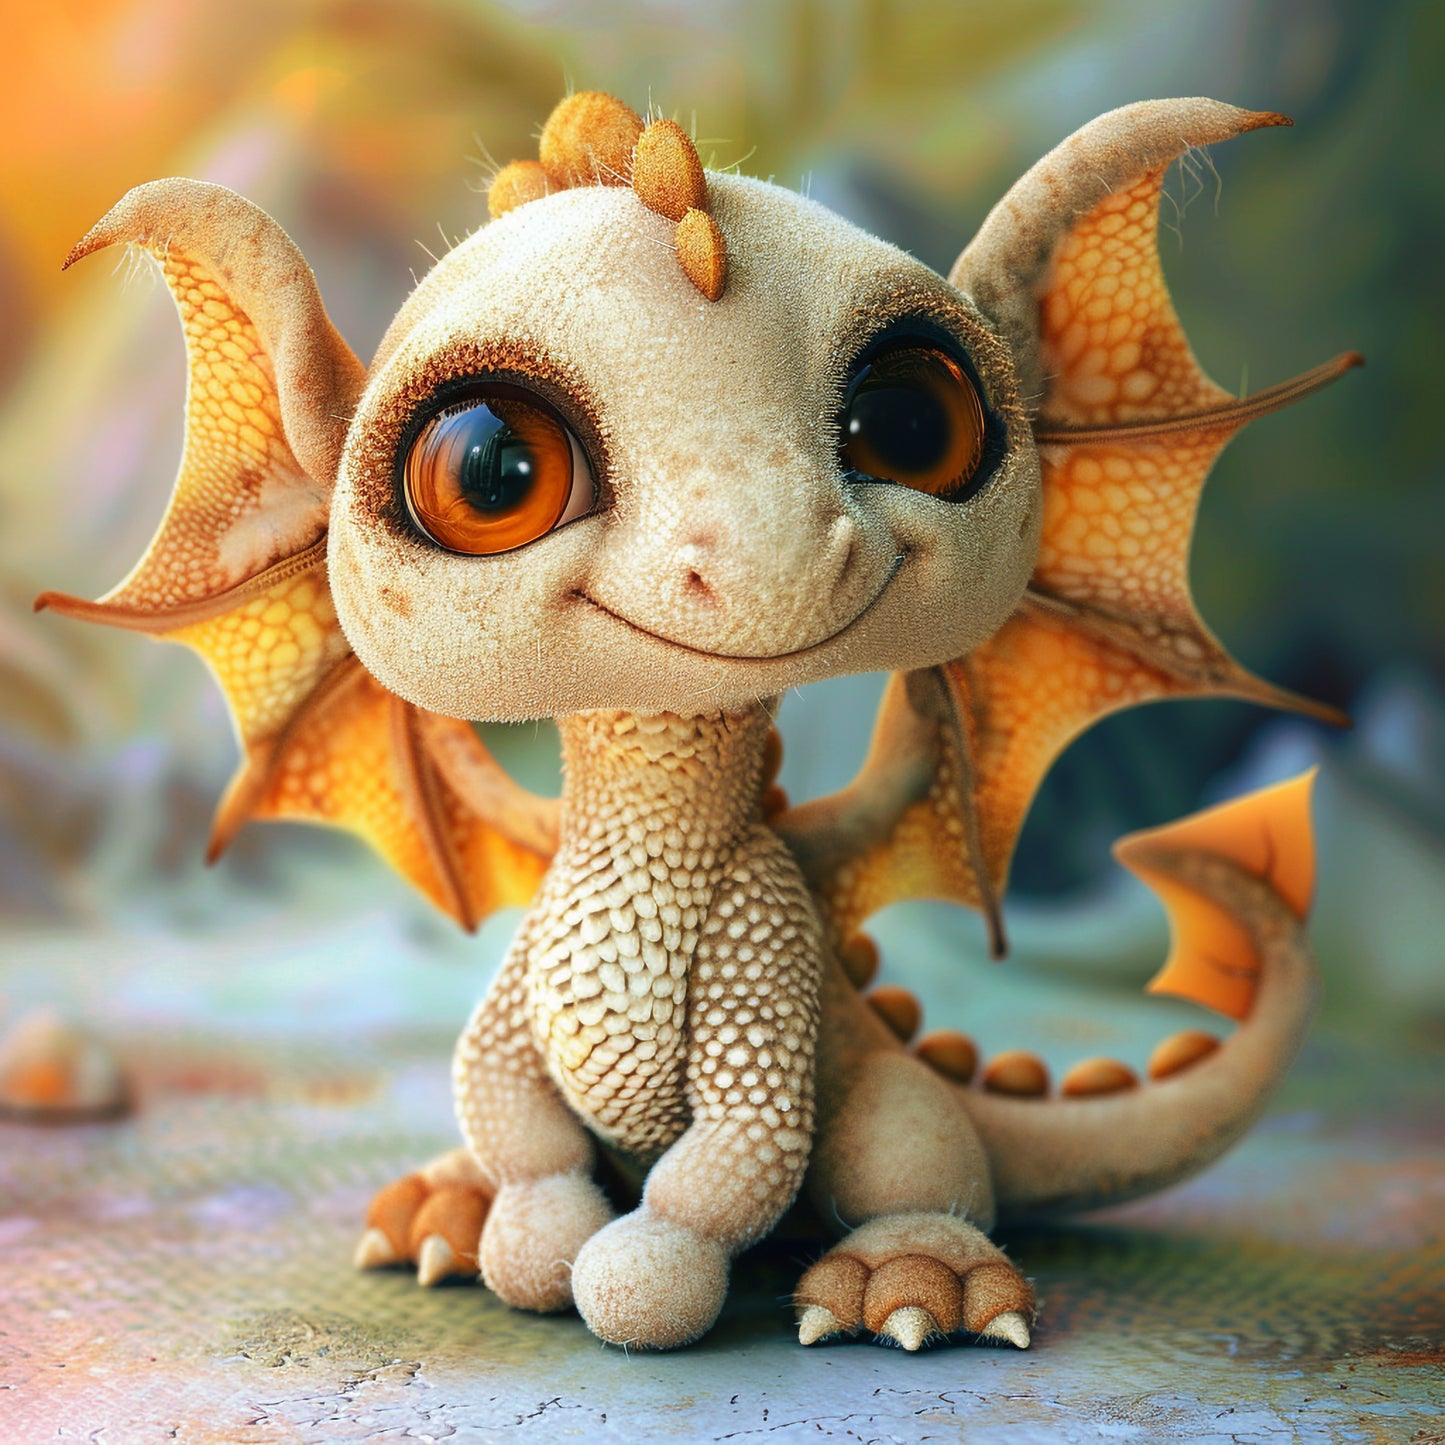 Adorable Needle Felted Baby Dragon with Big Eyes